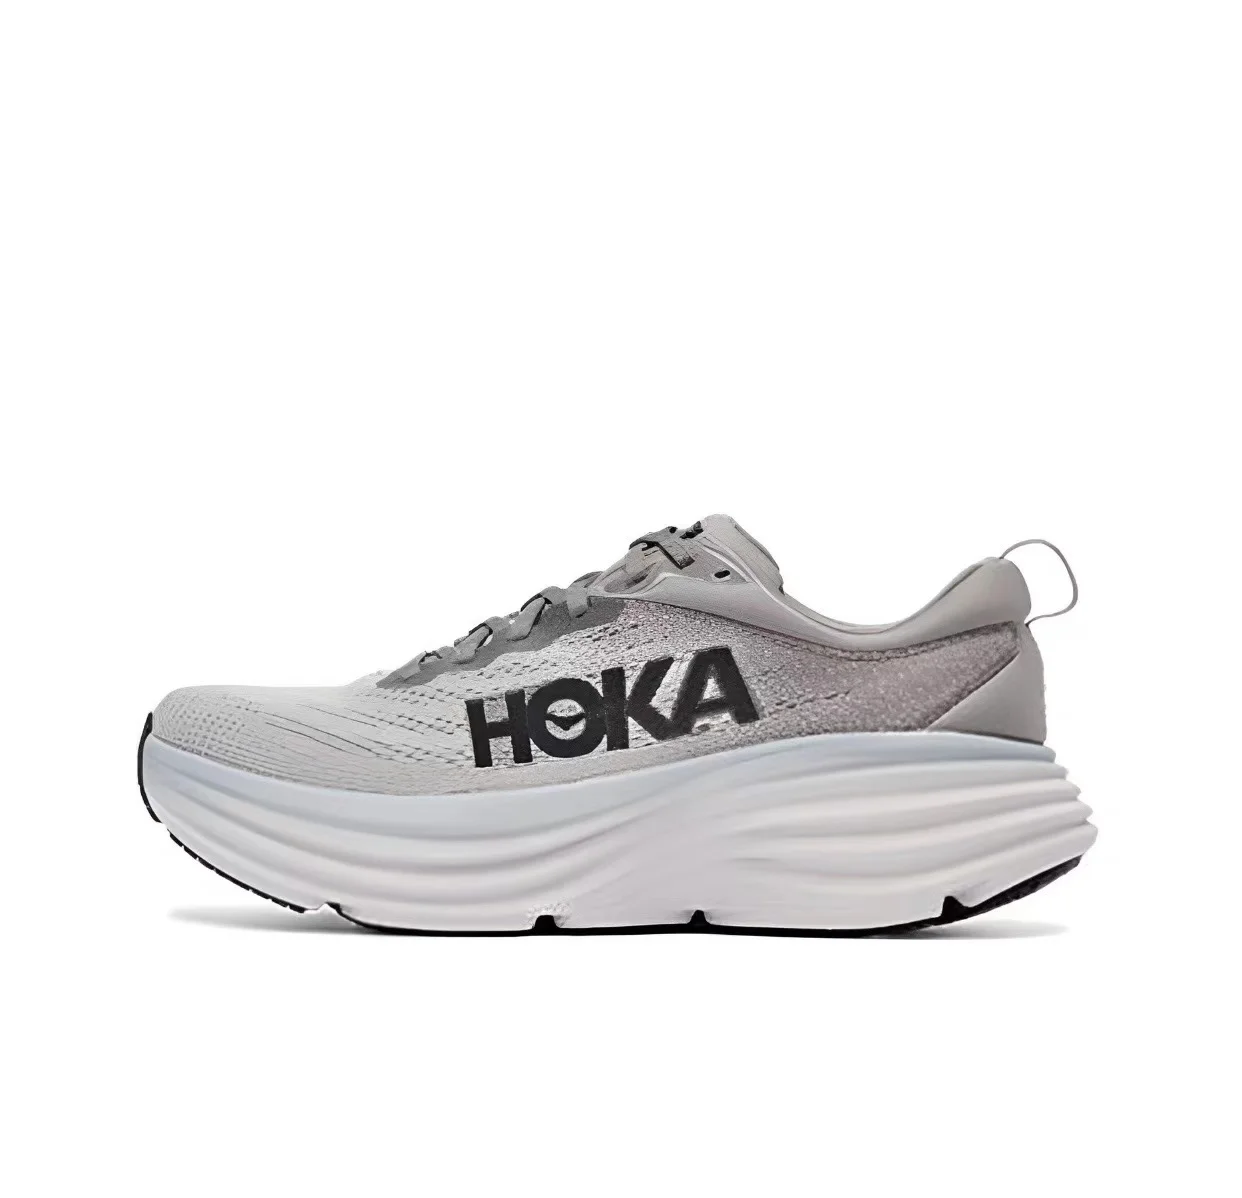 HOKA Bondi 8 zapatillas deportivas para hombre y mujer, zapatos transpirables antideslizantes con amortiguación para correr en carretera, calzado deportivo para exteriores